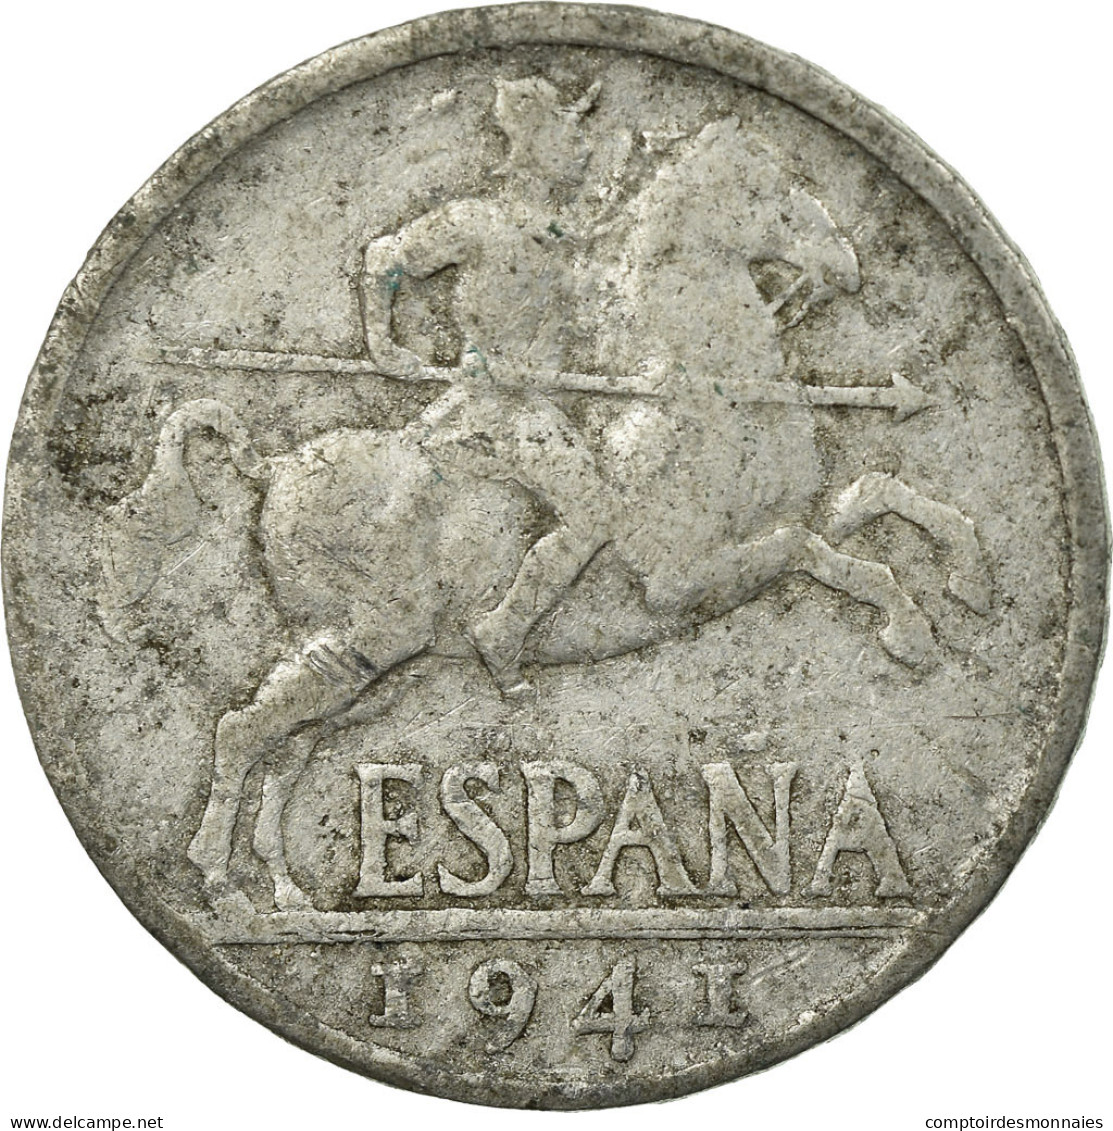 Monnaie, Espagne, 10 Centimos, 1941, TTB, Aluminium, KM:766 - 10 Céntimos